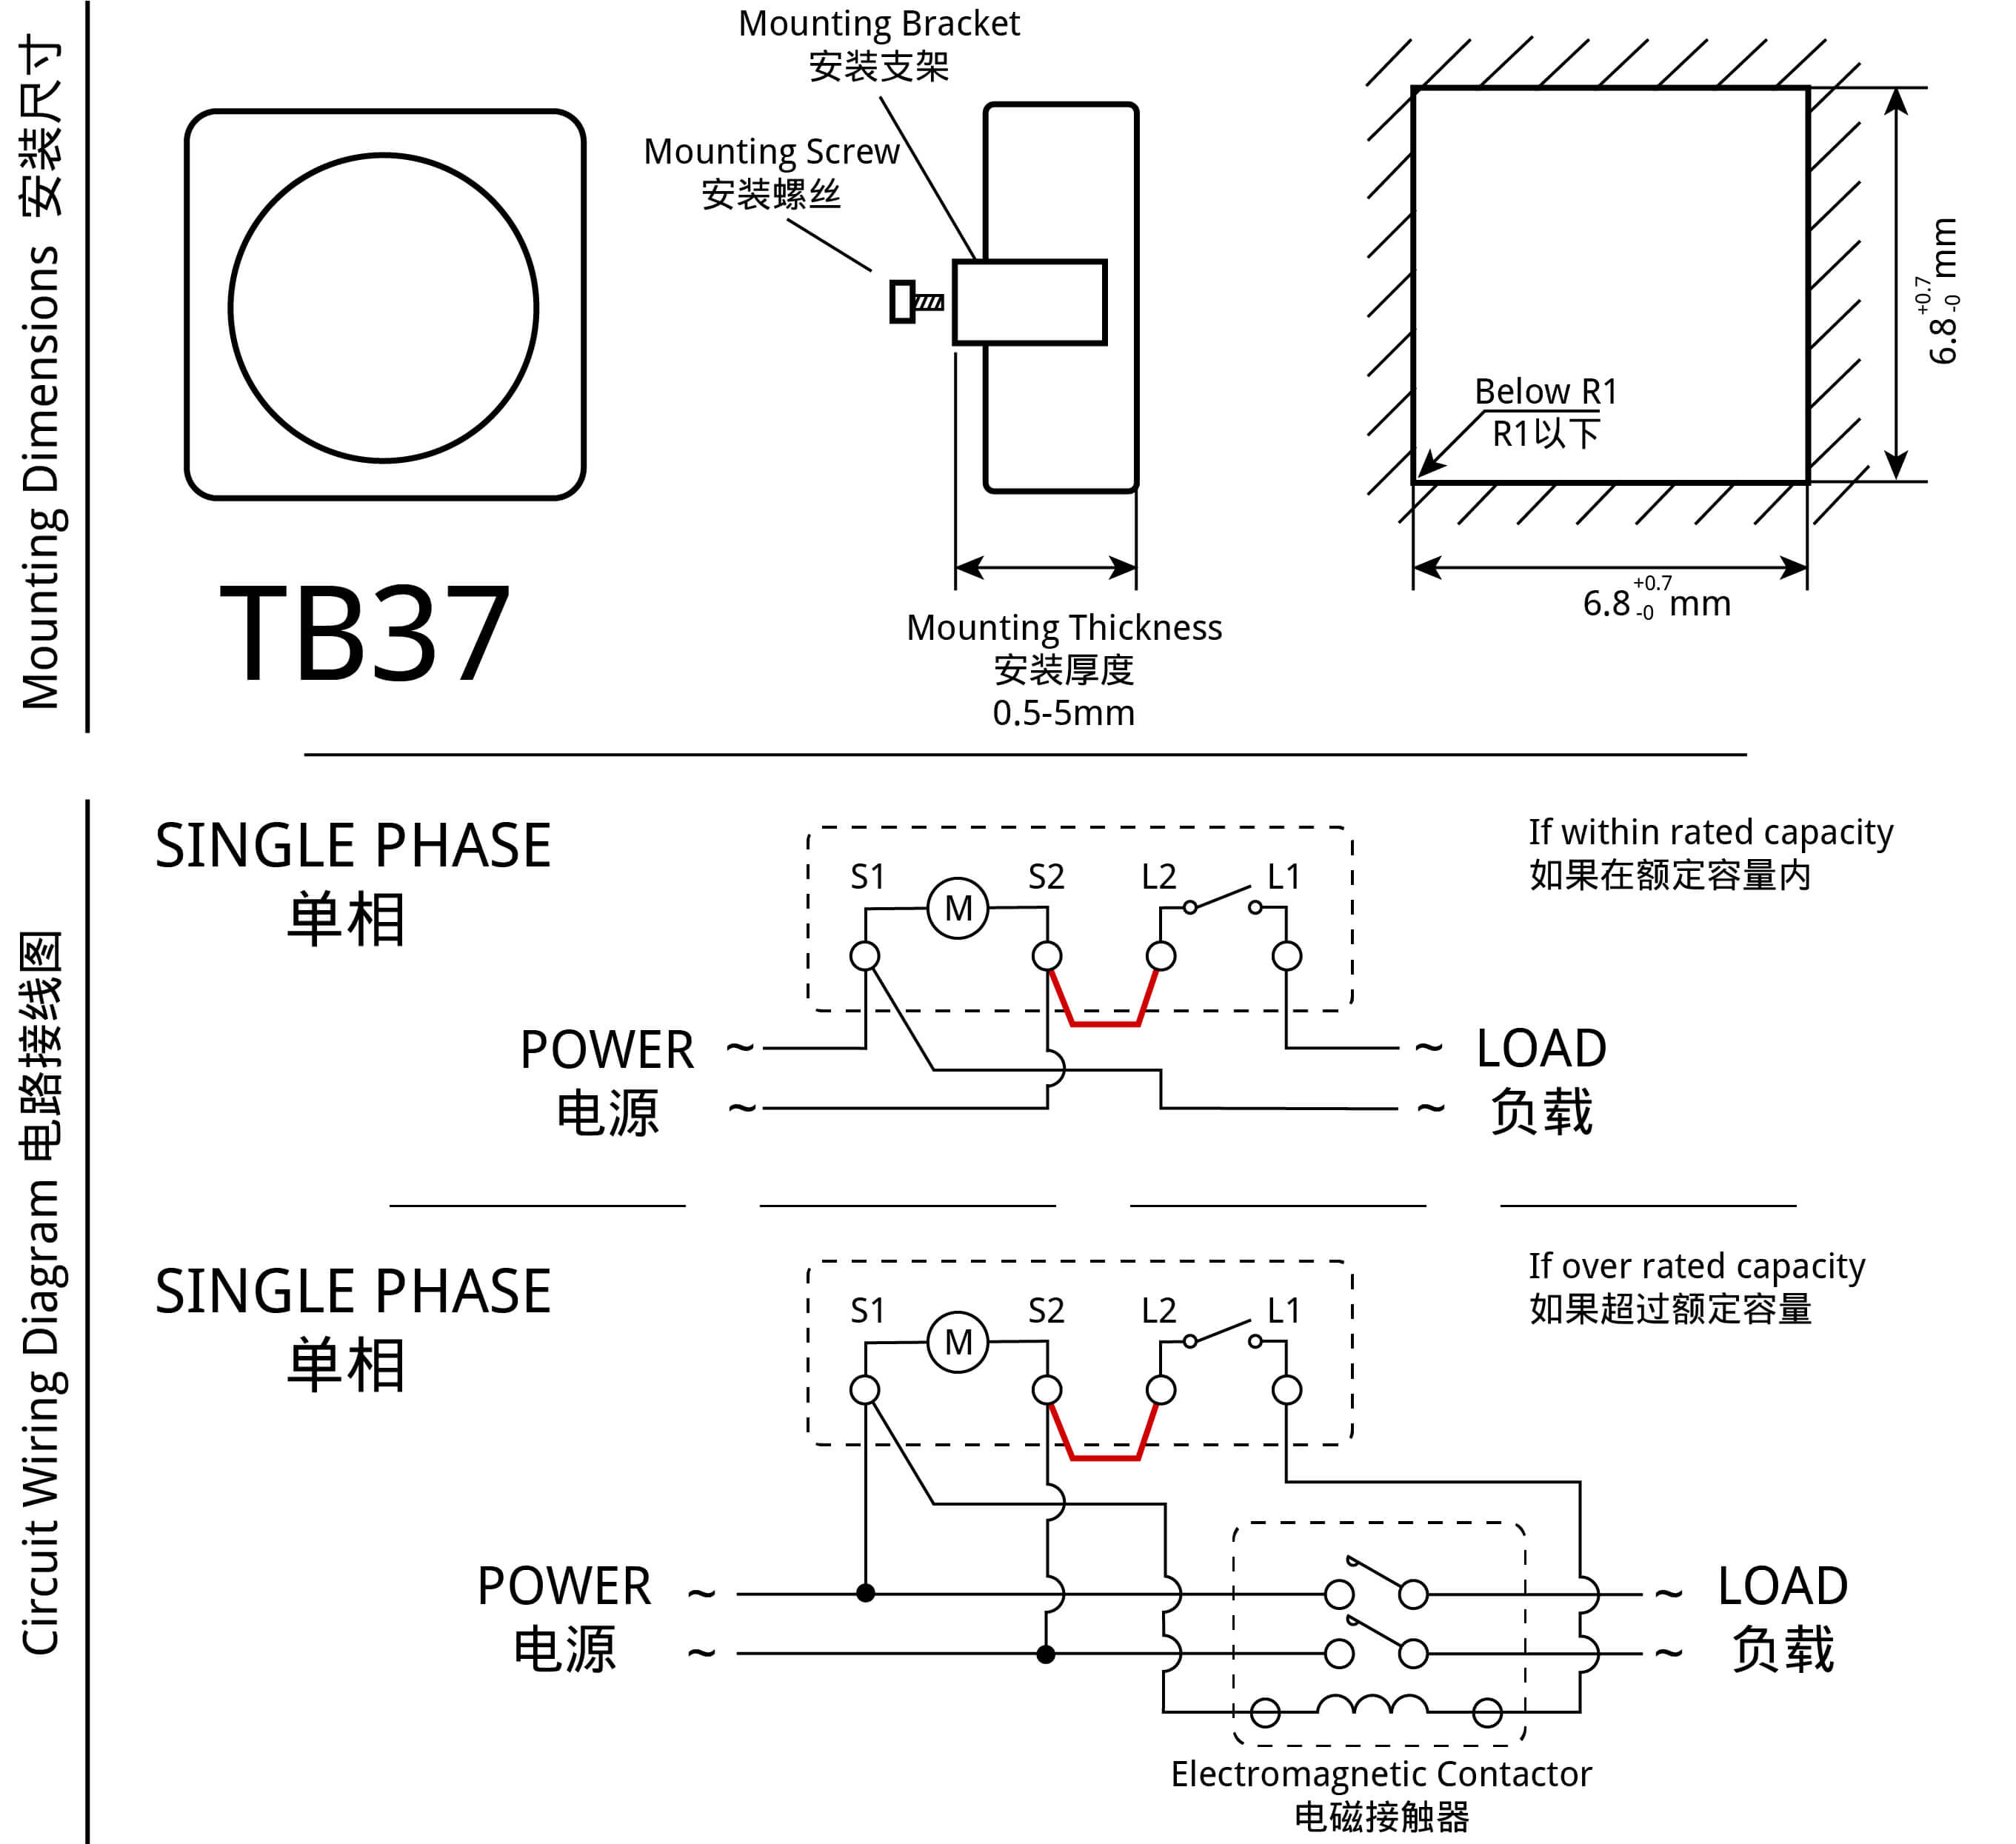 TB37 Series Dimensions & Wiring Diagram